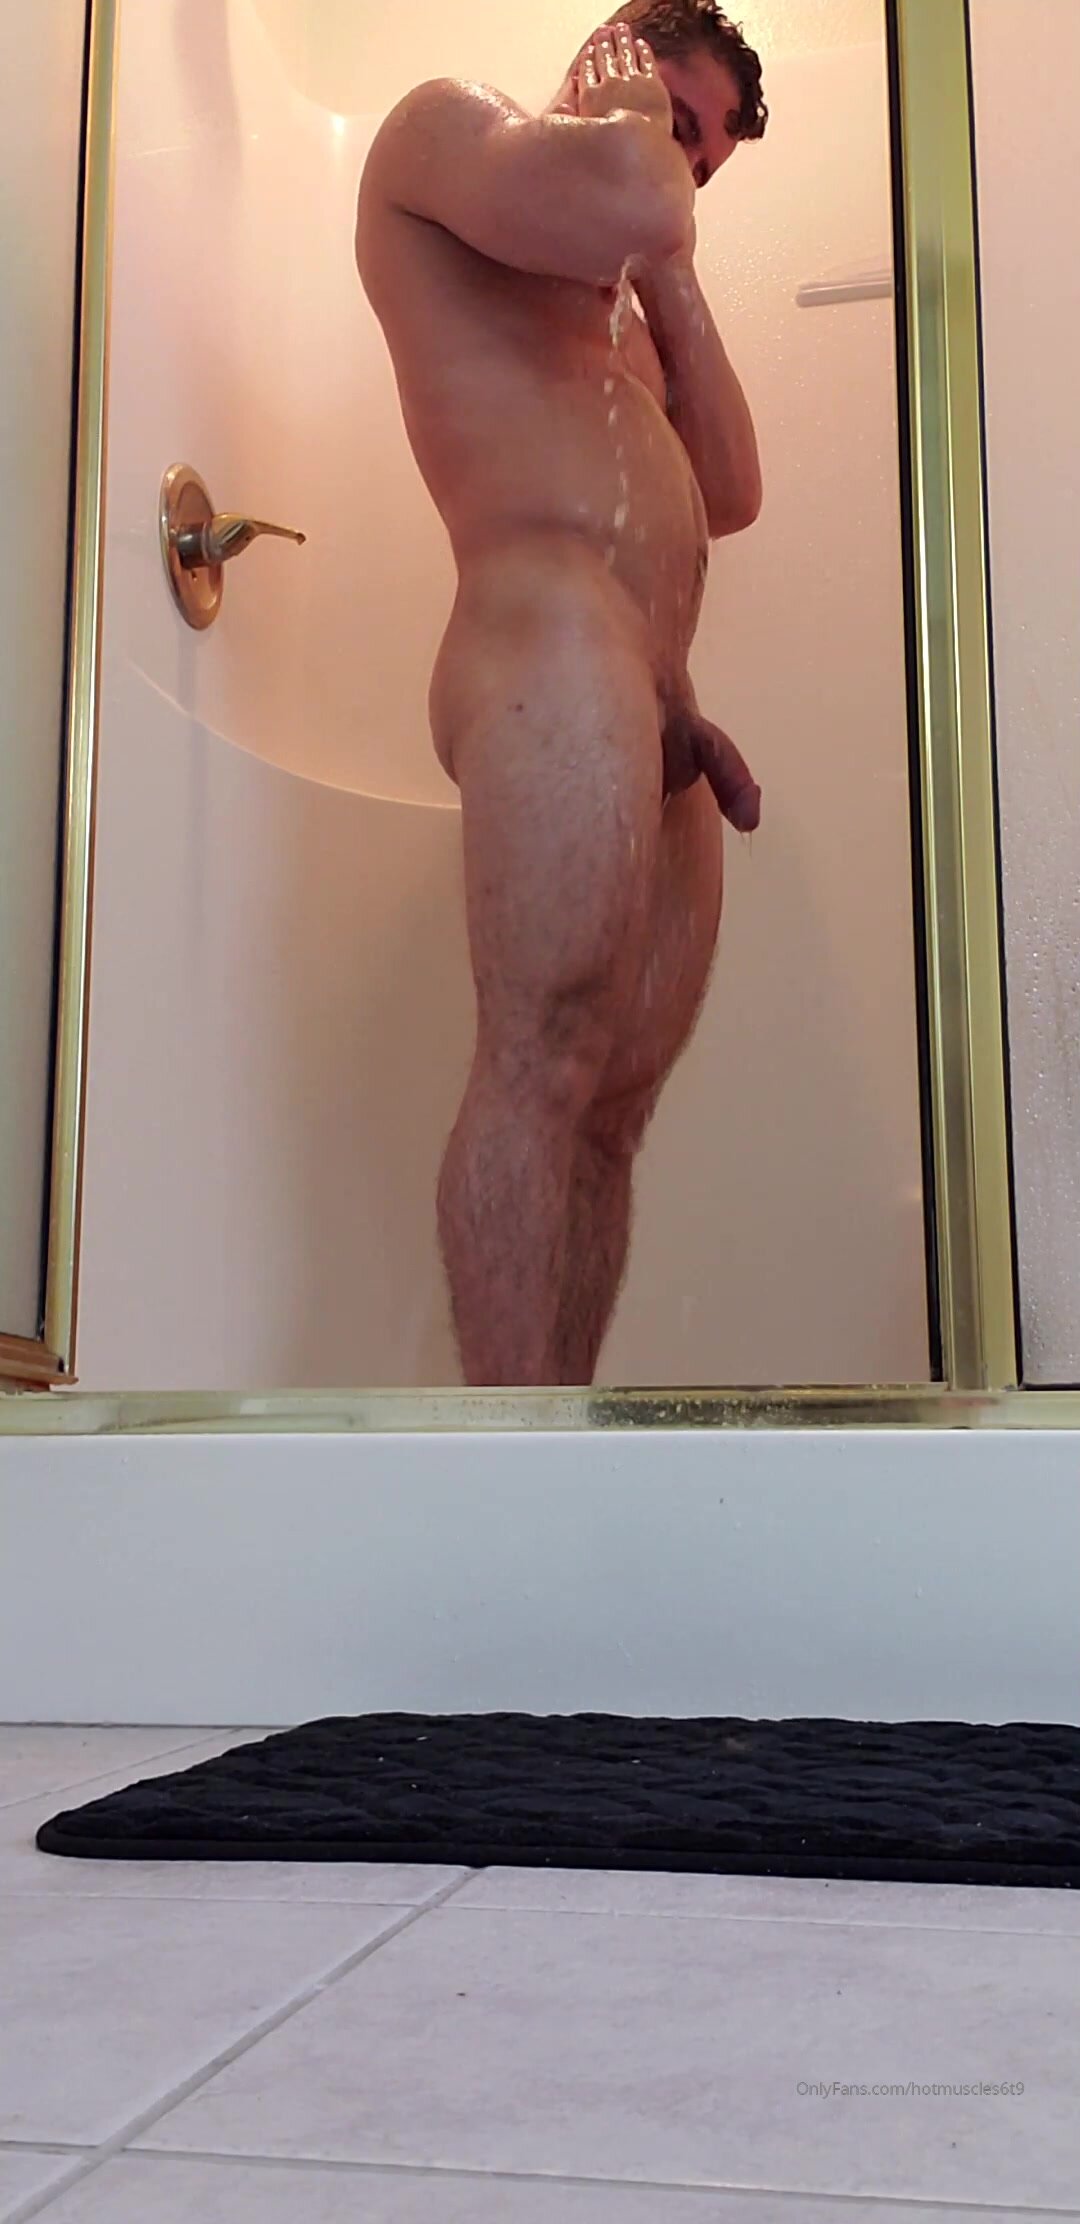 david b richardson recommends Nude Men Showering Videos